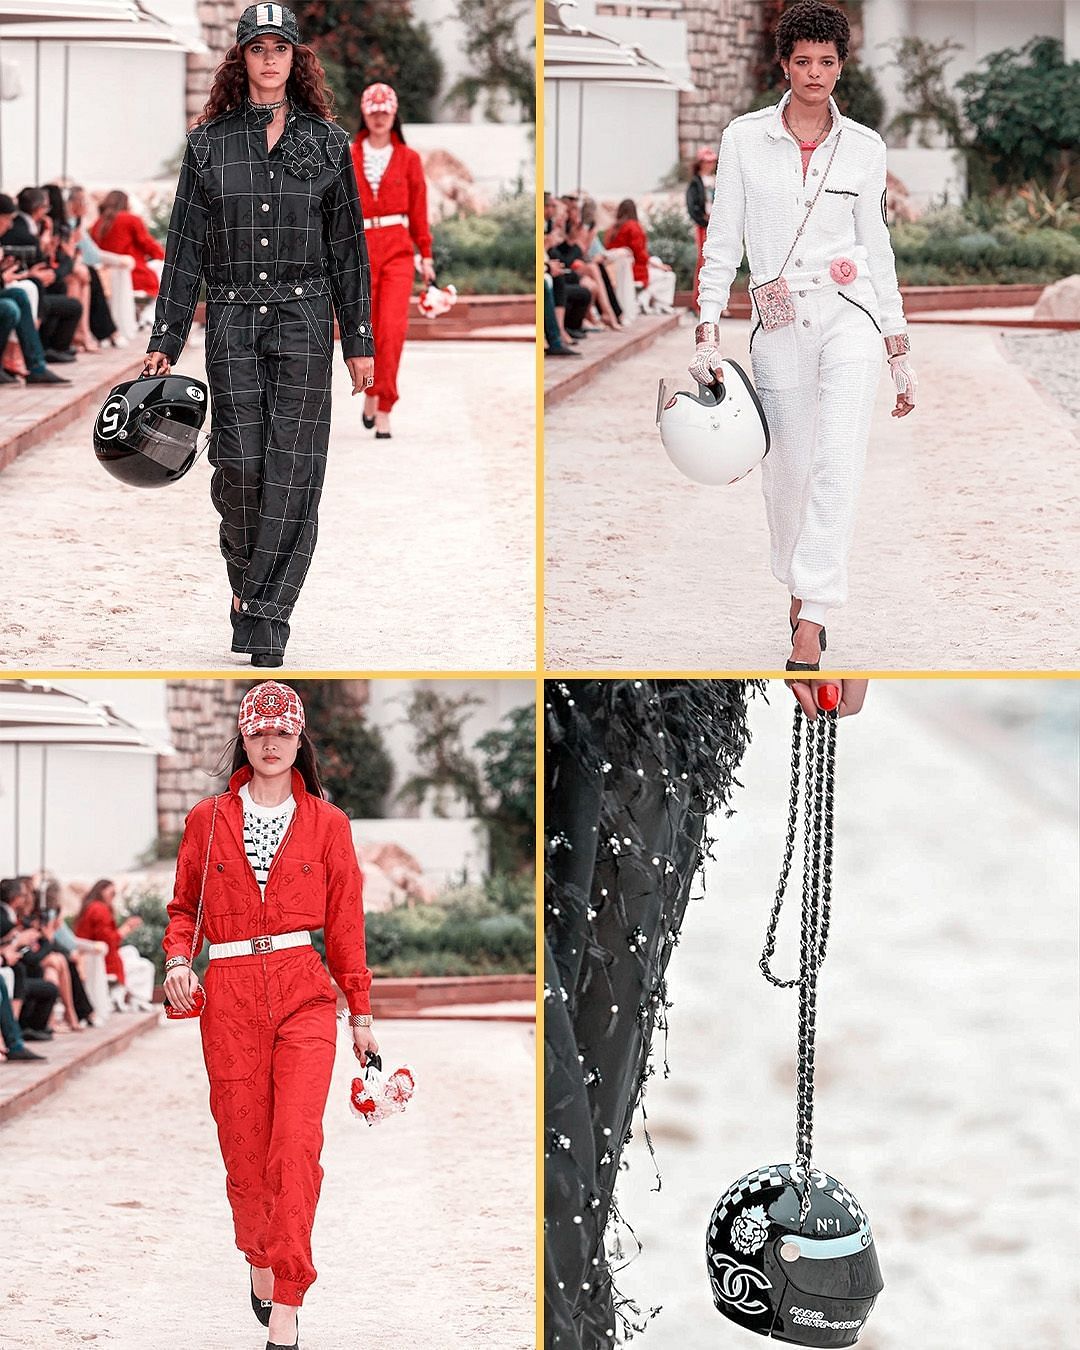 Chanel's Formula 1 tee trends on TikTok while Atelier Jolie takes fashion  headlines